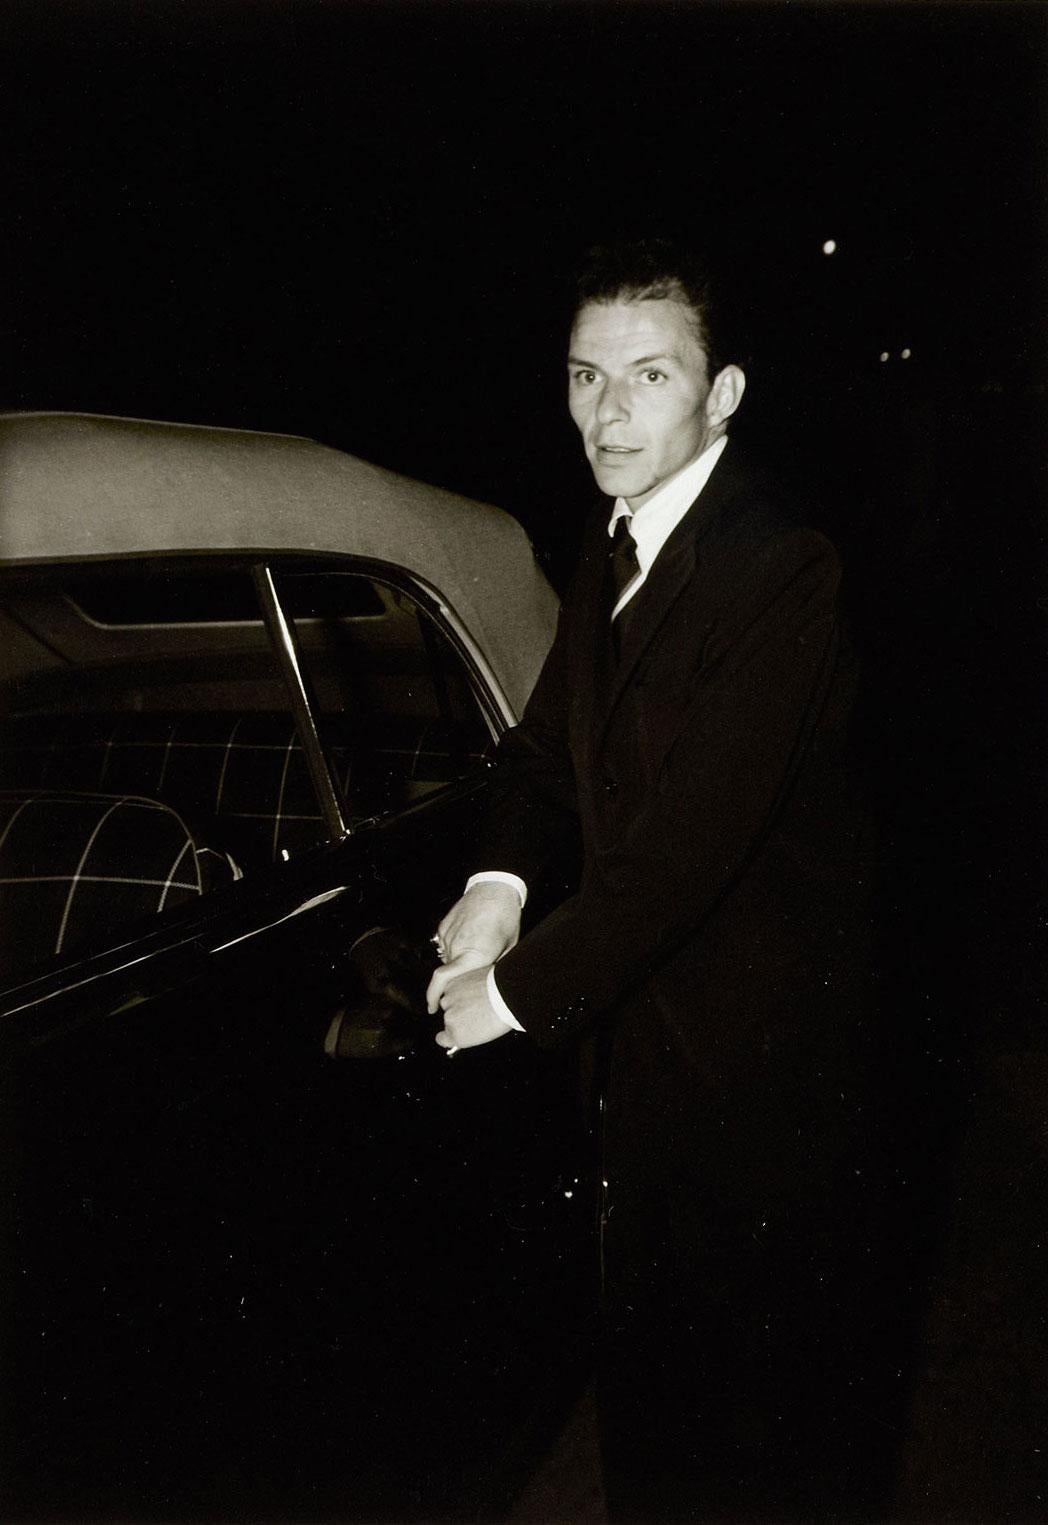 Frank Sinatra geht nach Hause – Nachlass gestempelt